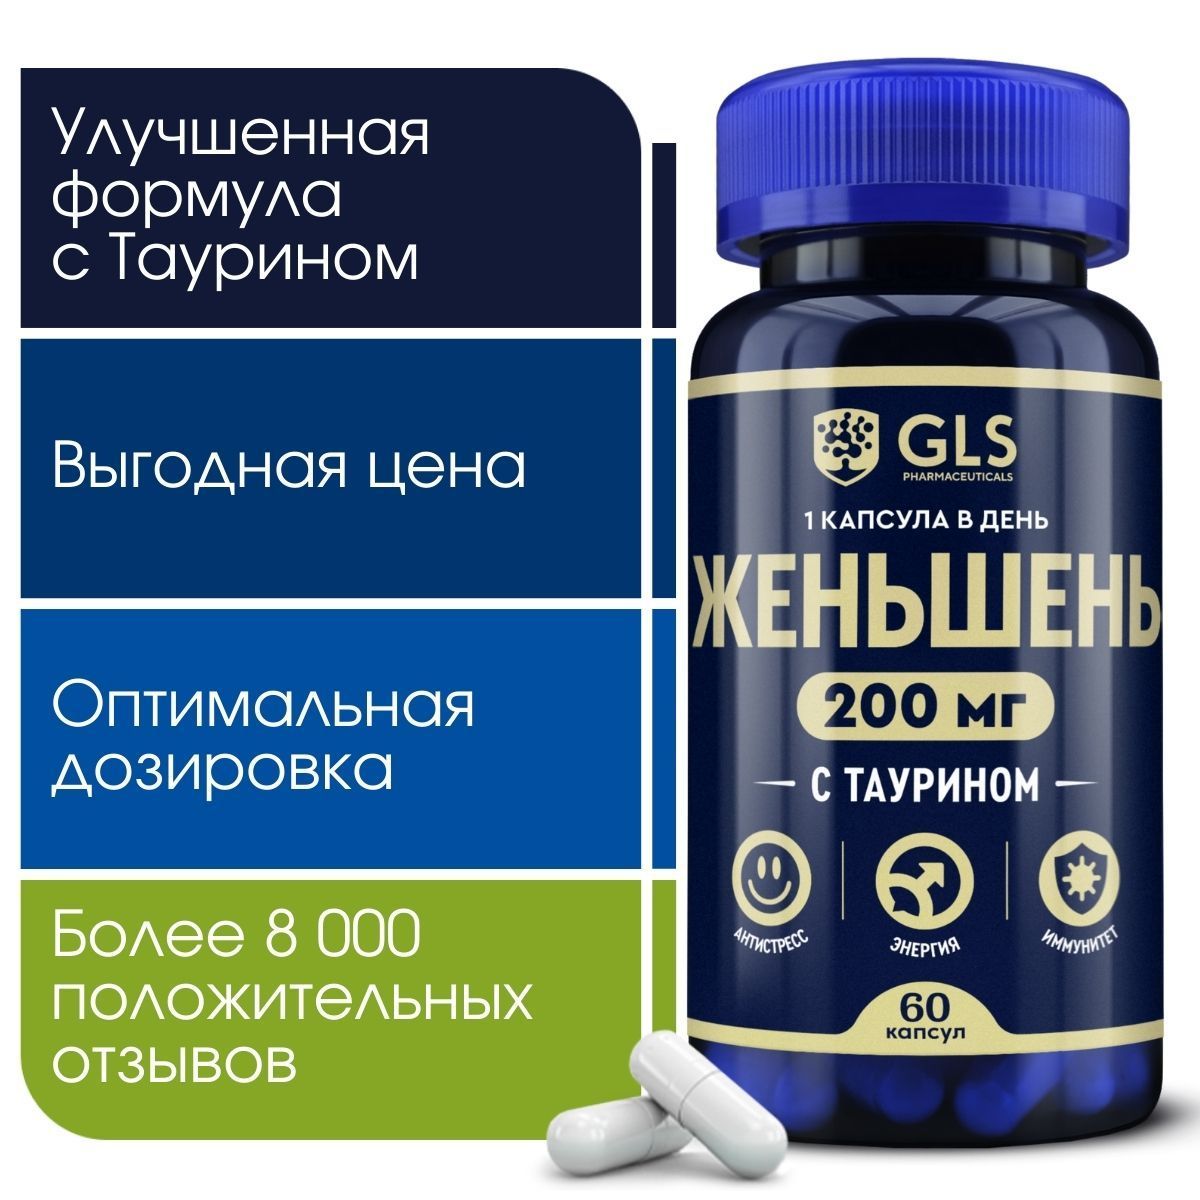 Ципротерон-Тева Таблетки 50 мг 50 шт